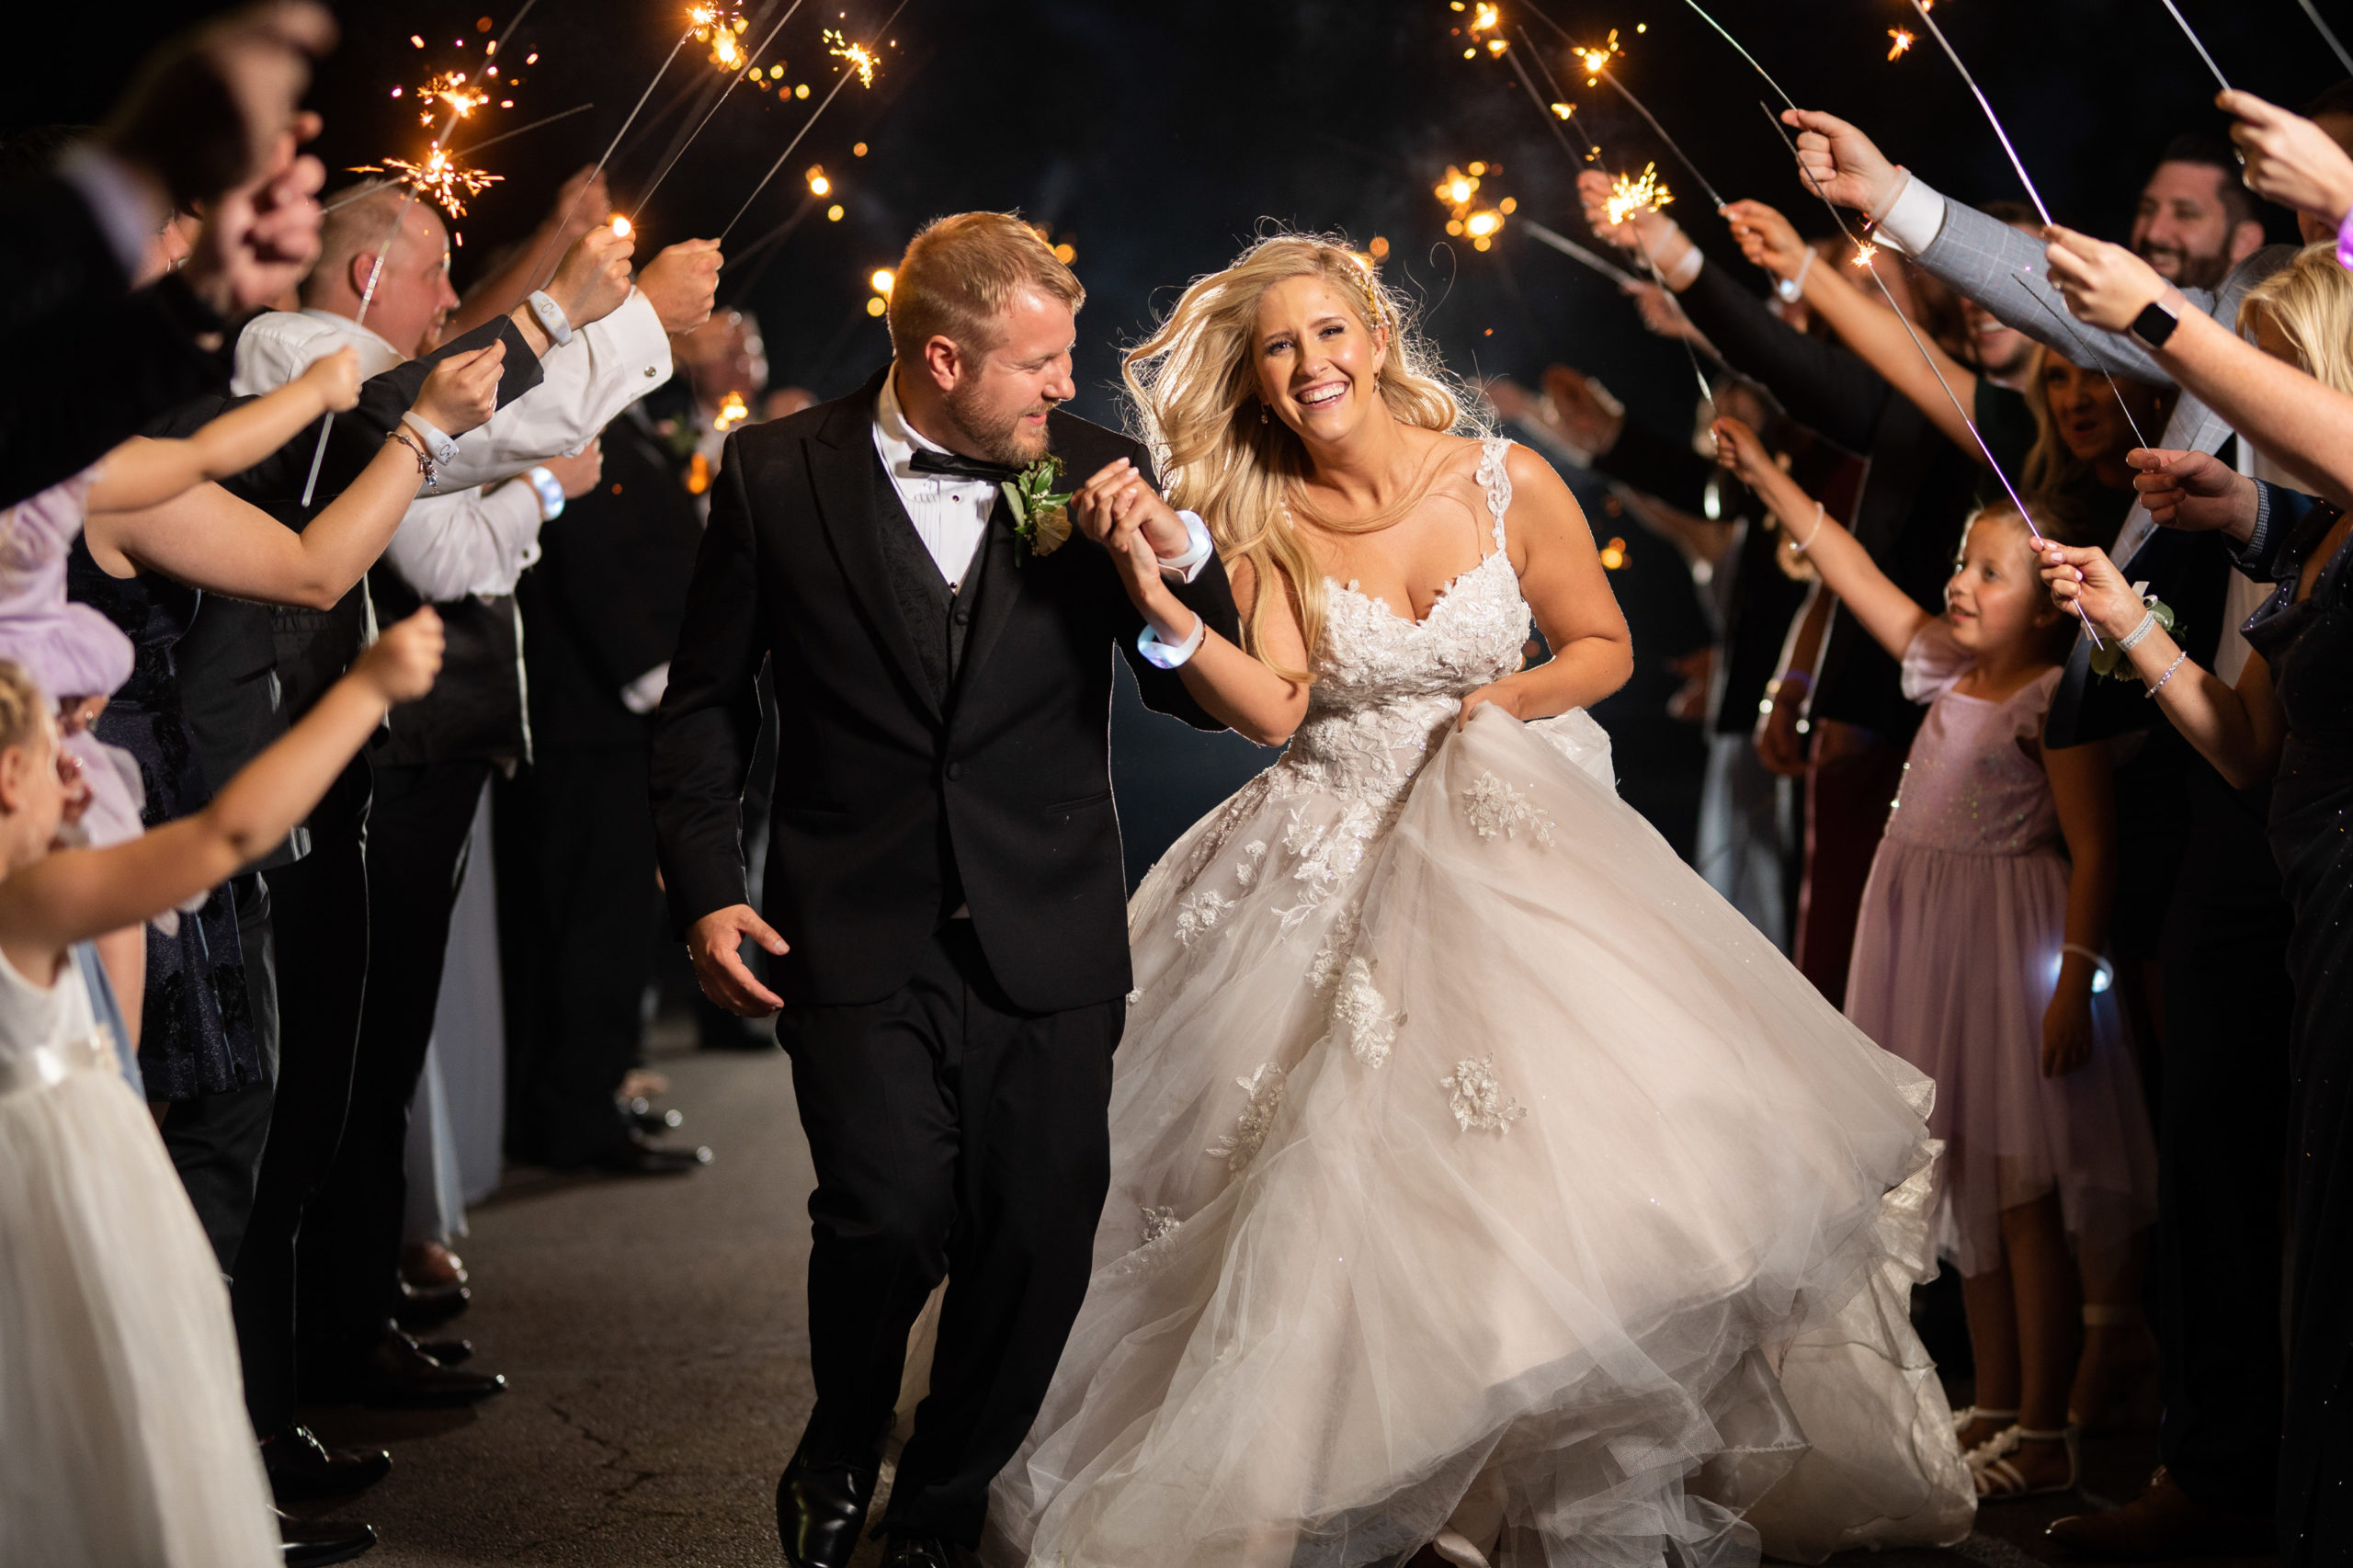 London House Ruffled Feathers Lemont Joliet Chicago Wedding Photographer Lauren Ashley Studios scaled